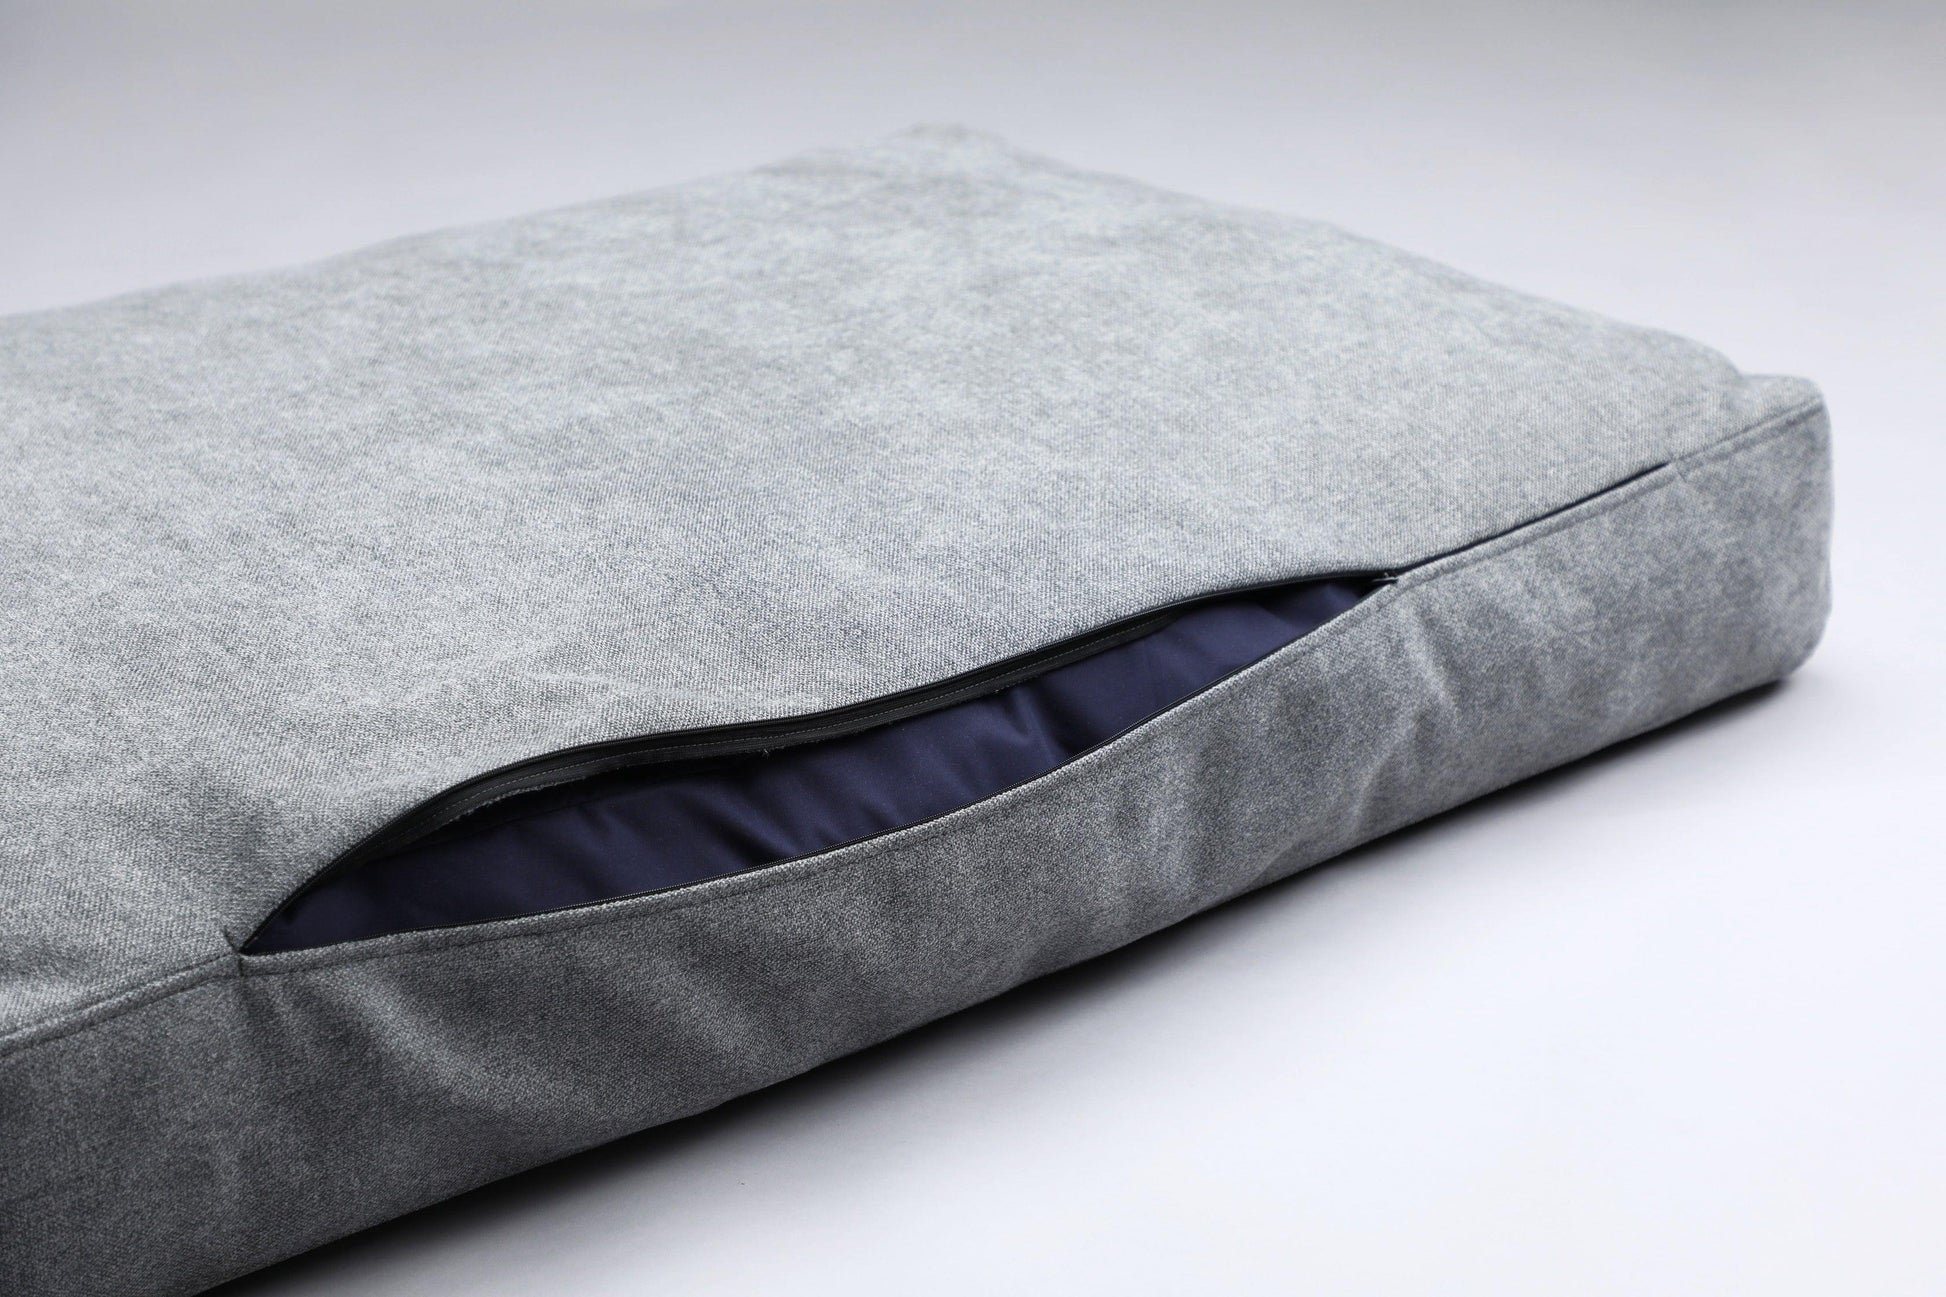 Scandinavian design dog bed | 2-sided | OSLO GREY - premium dog goods handmade in Europe by animalistus